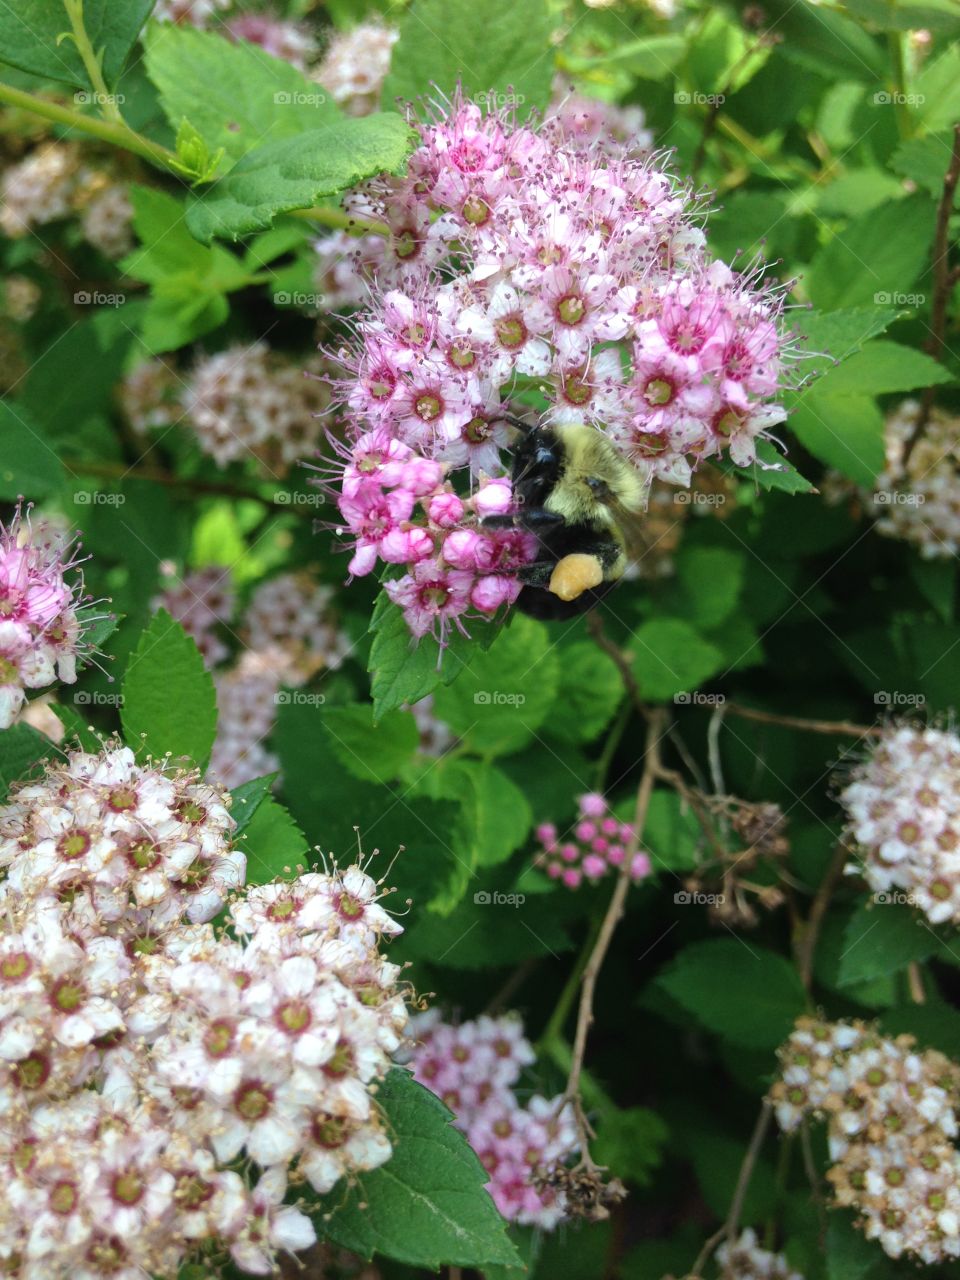 Bee. Bee on flower